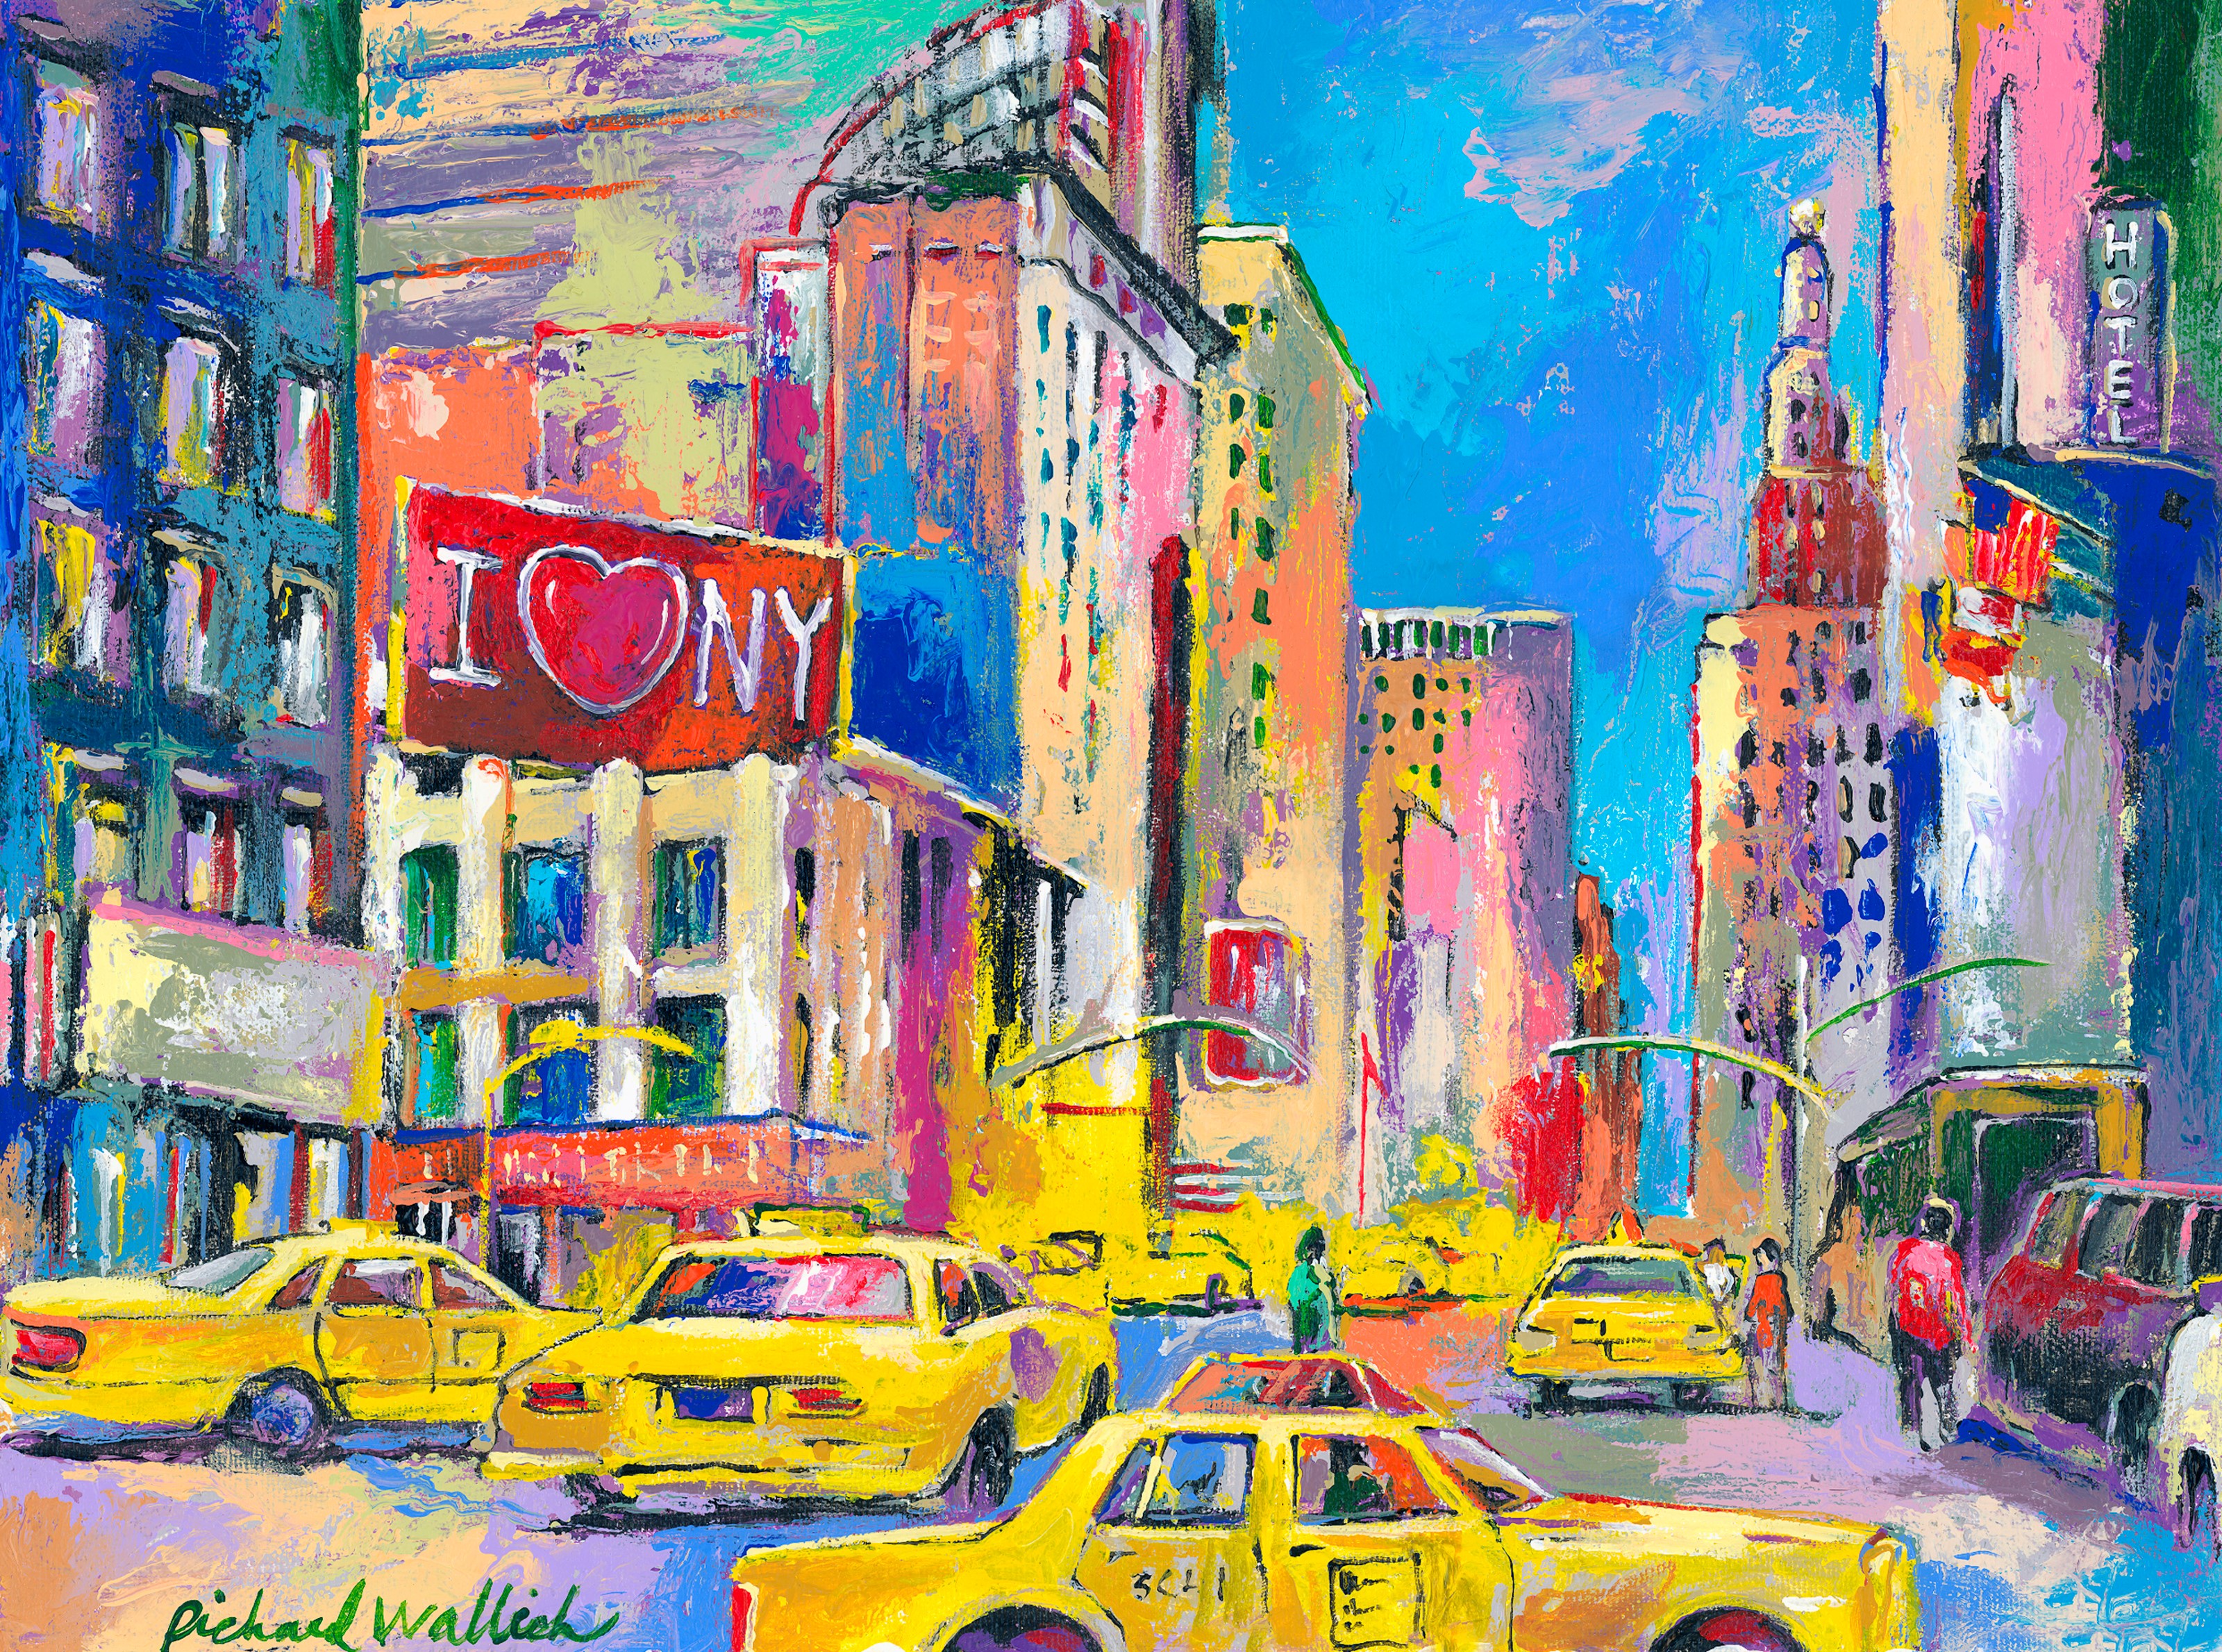 New York Taxi Wallpaper Mural - Murals Your Way